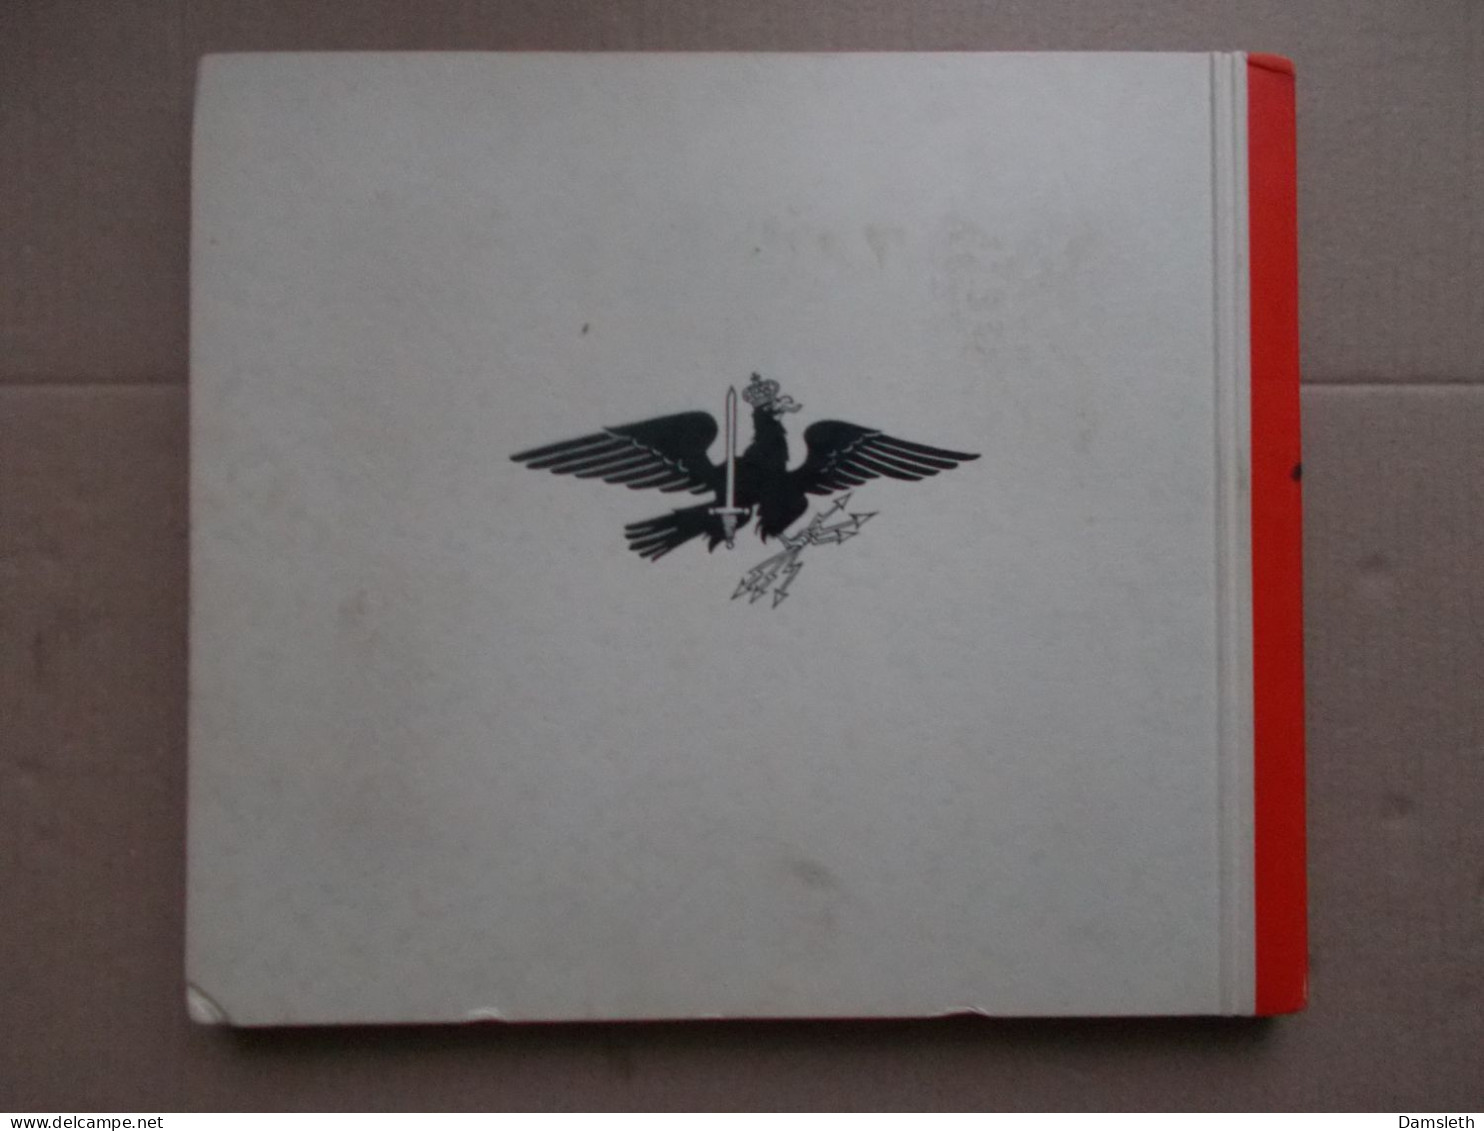 Germany Third Reich NSDAP-SA "Sturm" Zigaretten; cigarette card album; German Army uniforms, Friedrich der Grossen